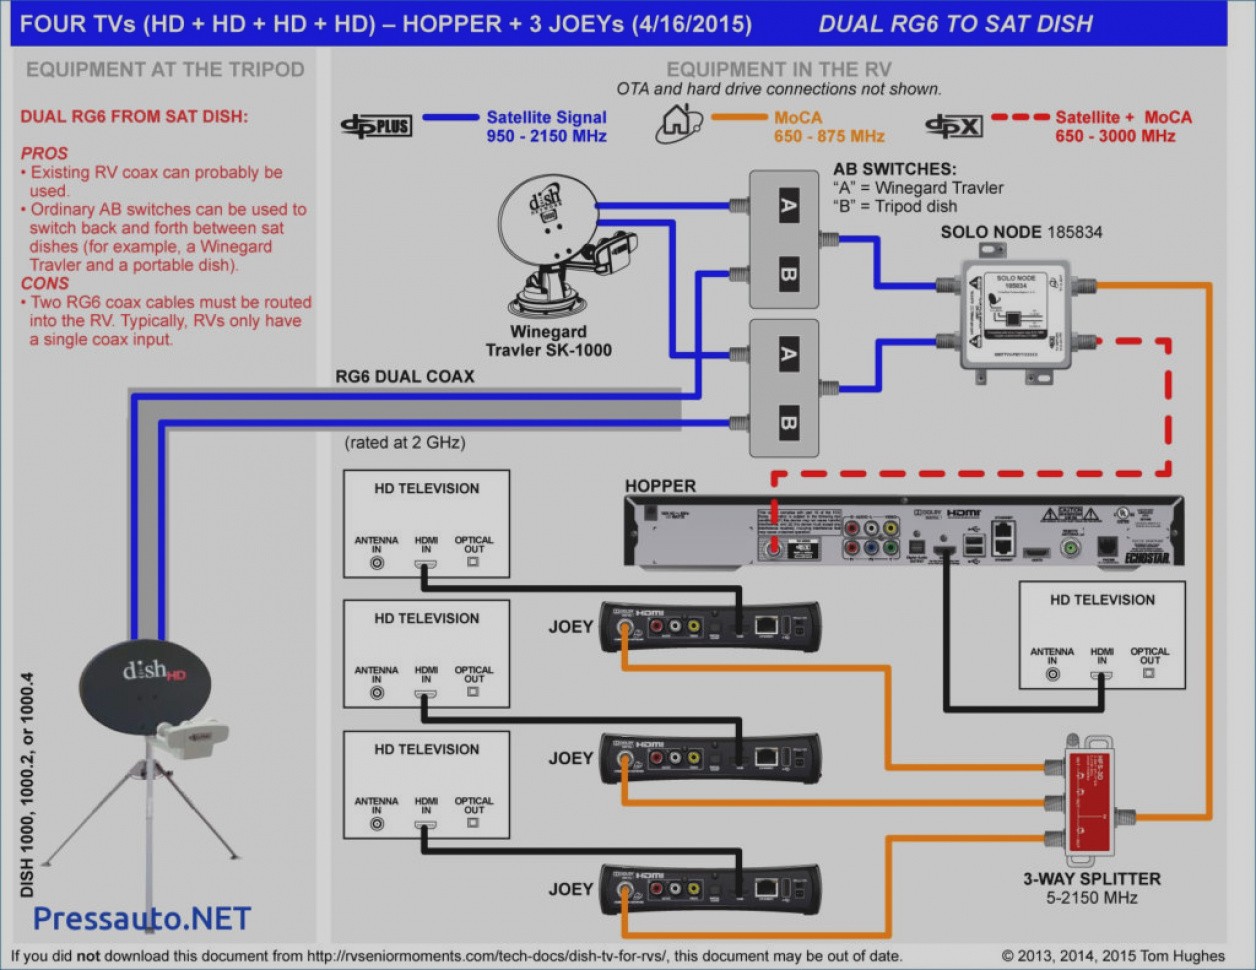 Awesome Dish Network Wiring Diagram Gimnazijabp Me